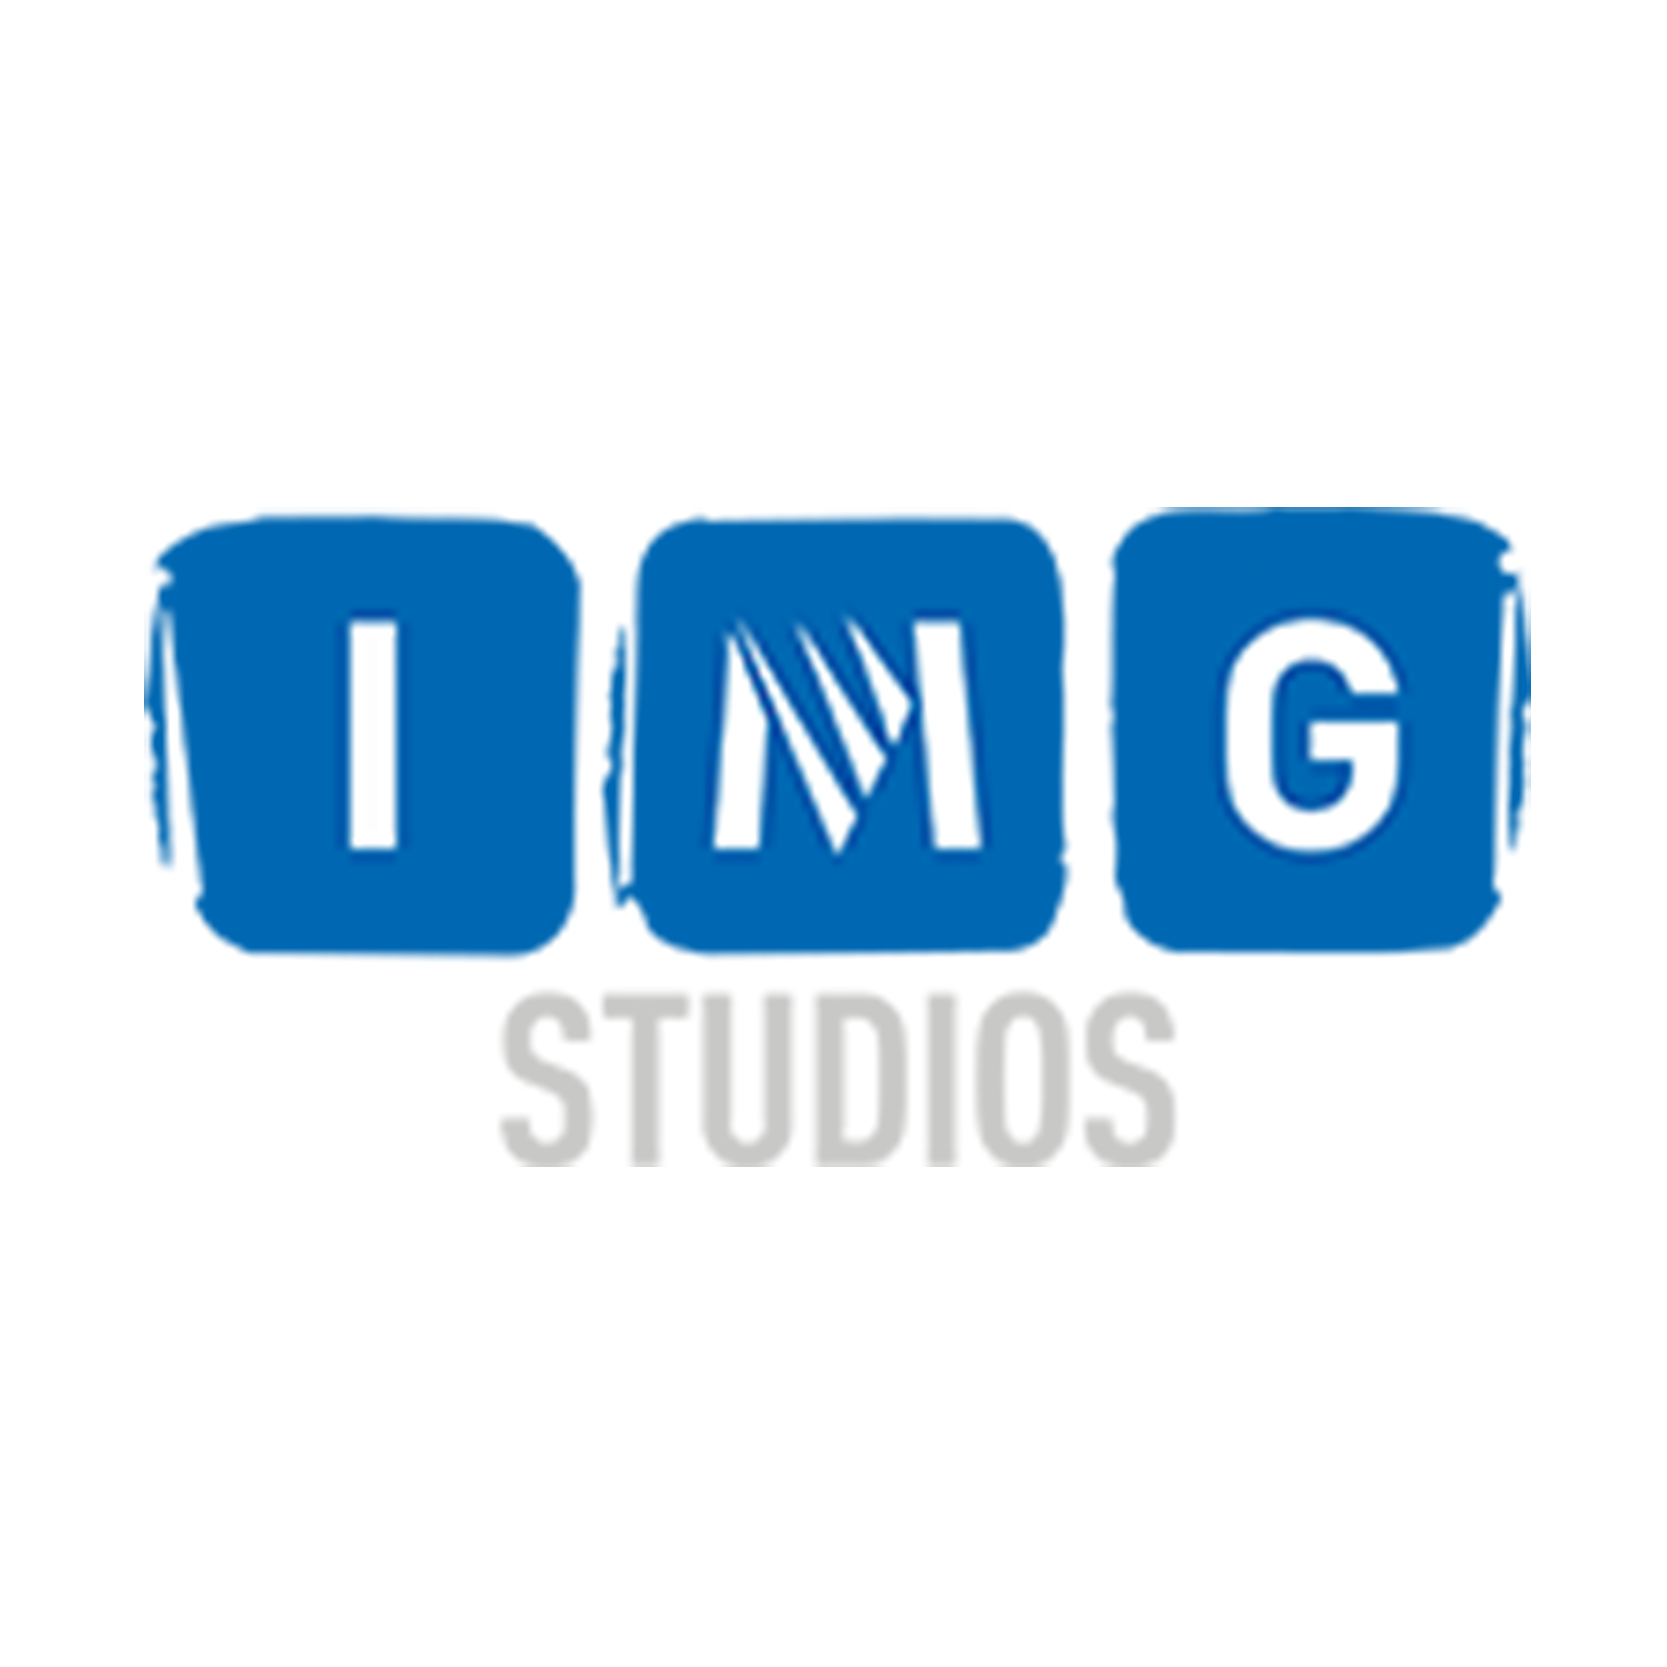 IMG Studios